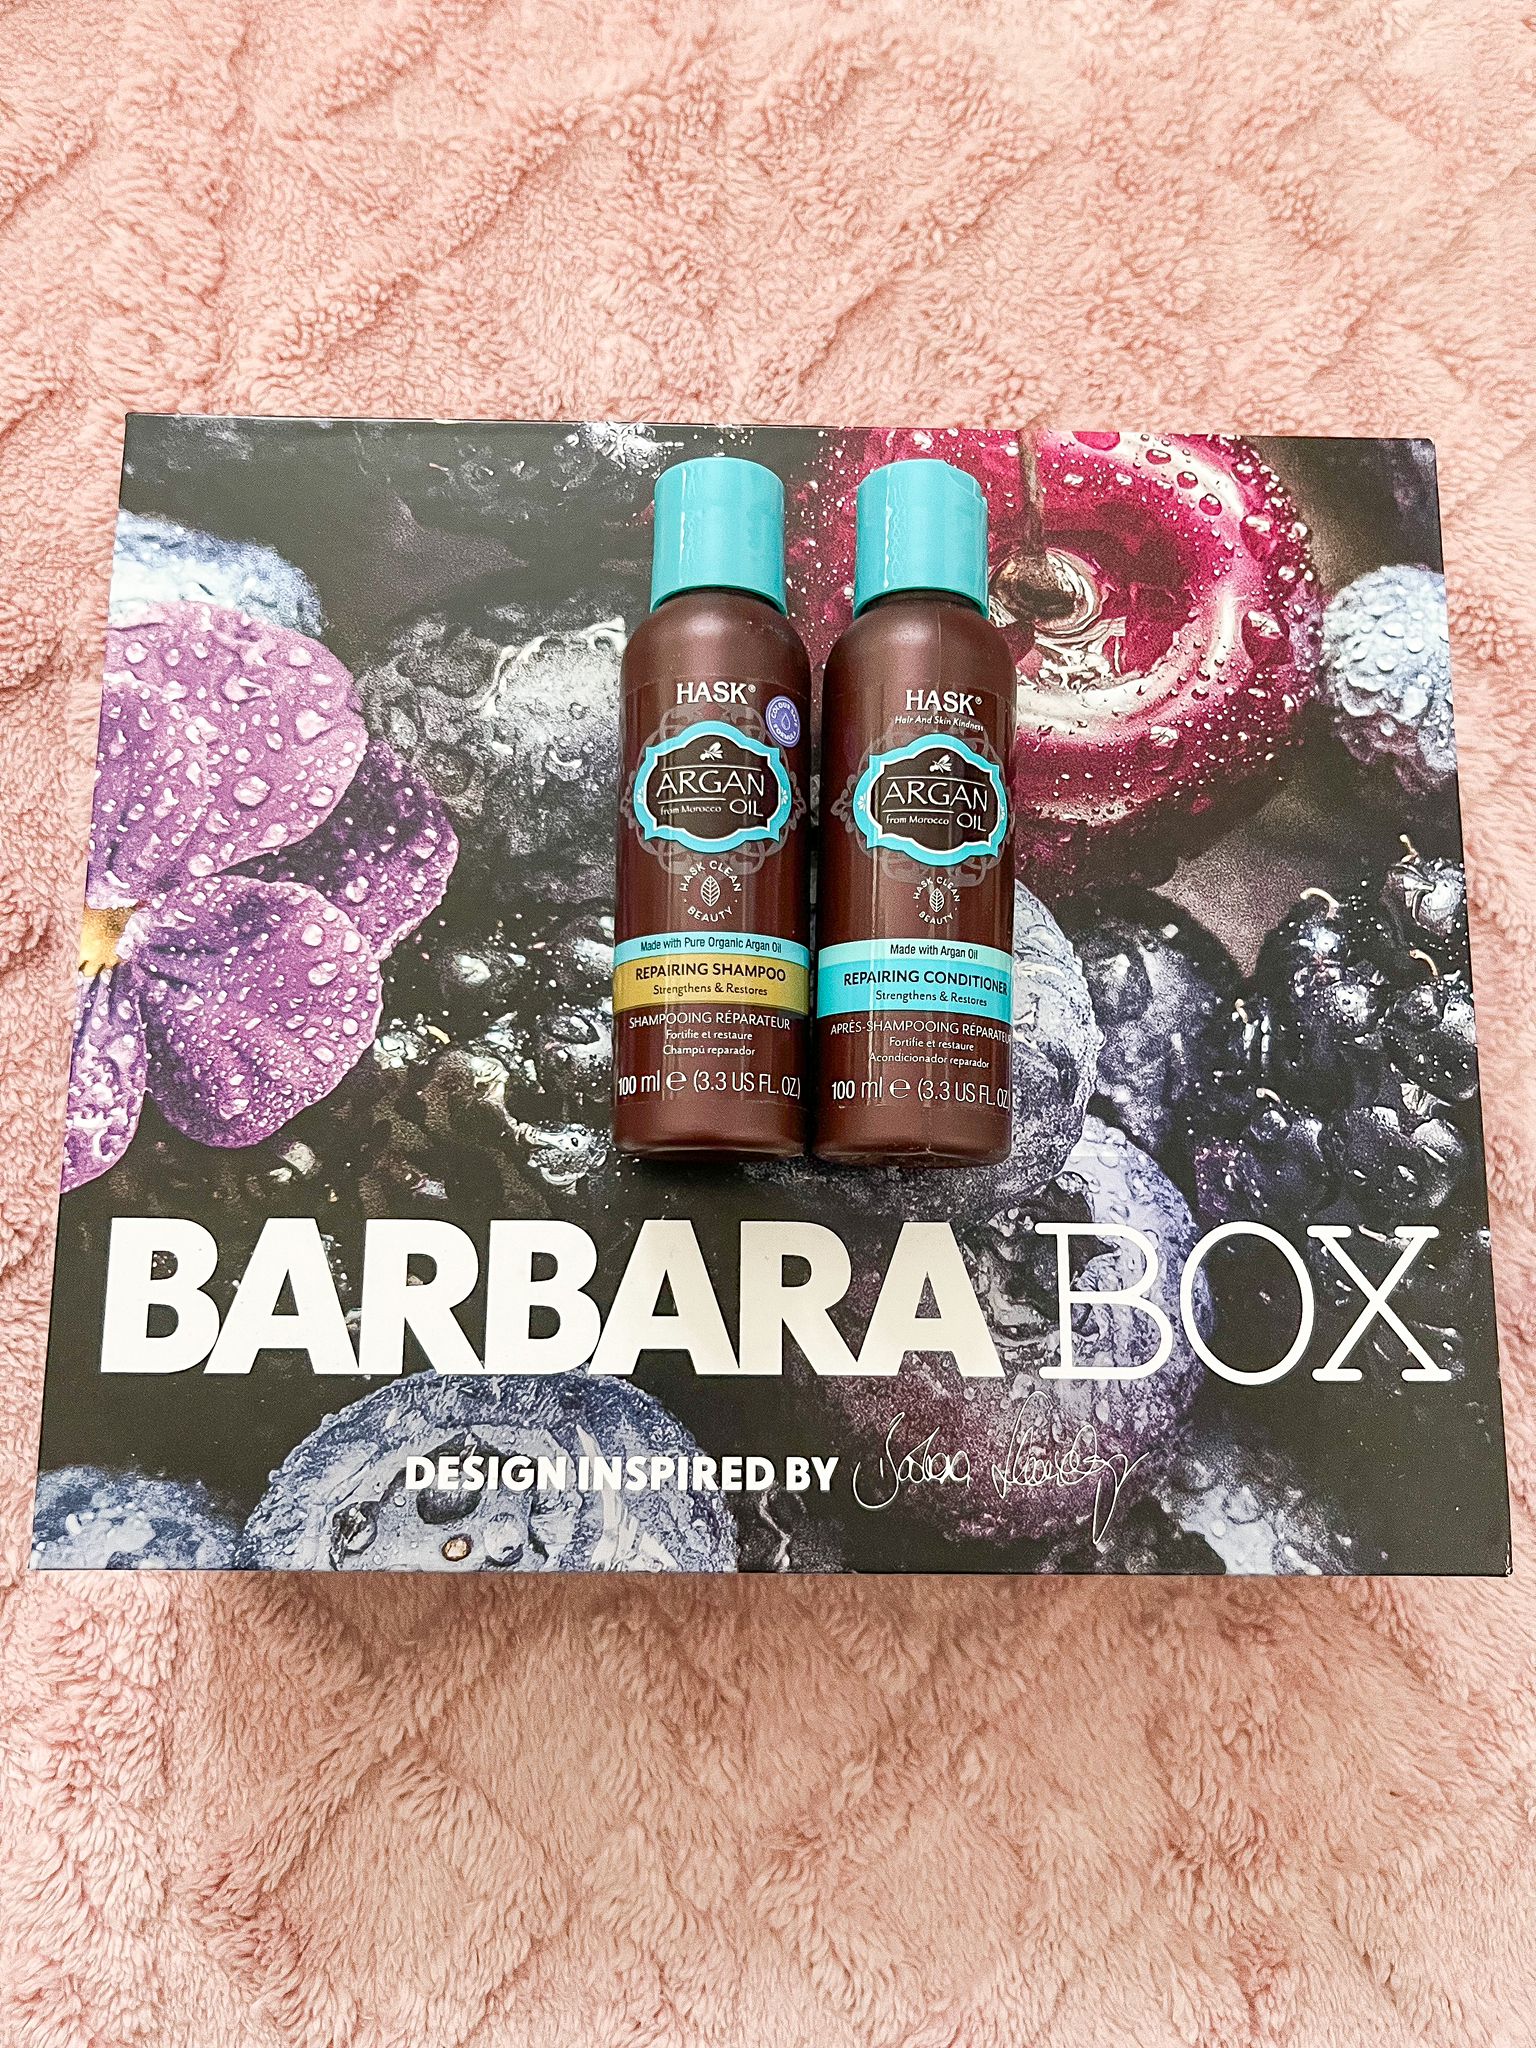 Barbara Box Very Berry